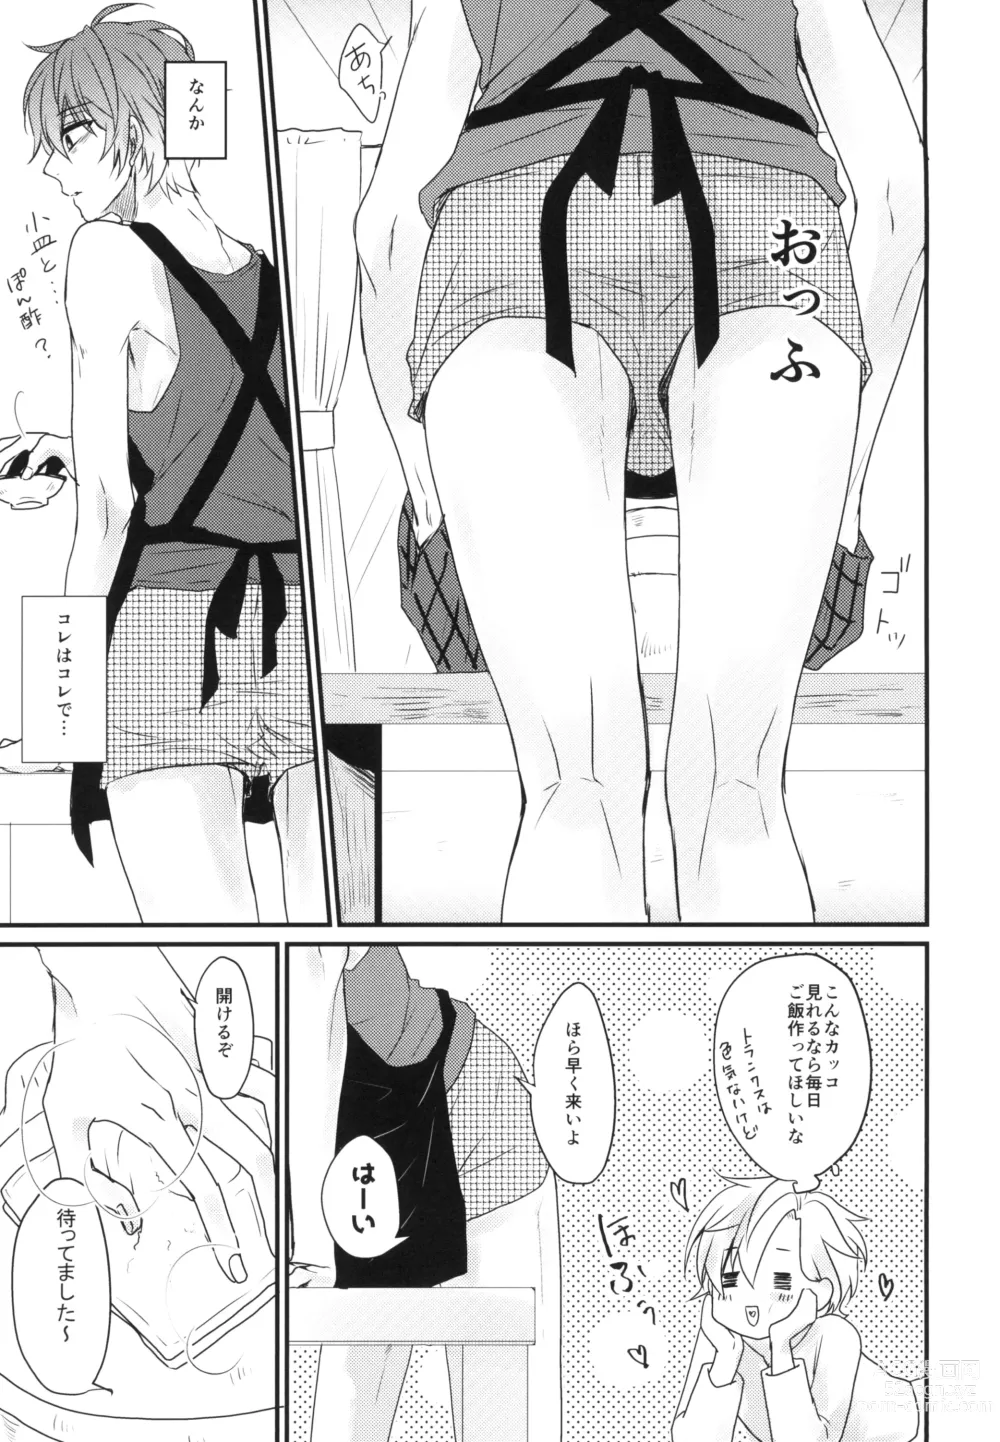 Page 9 of doujinshi Challenge Hanayome Ichinensei